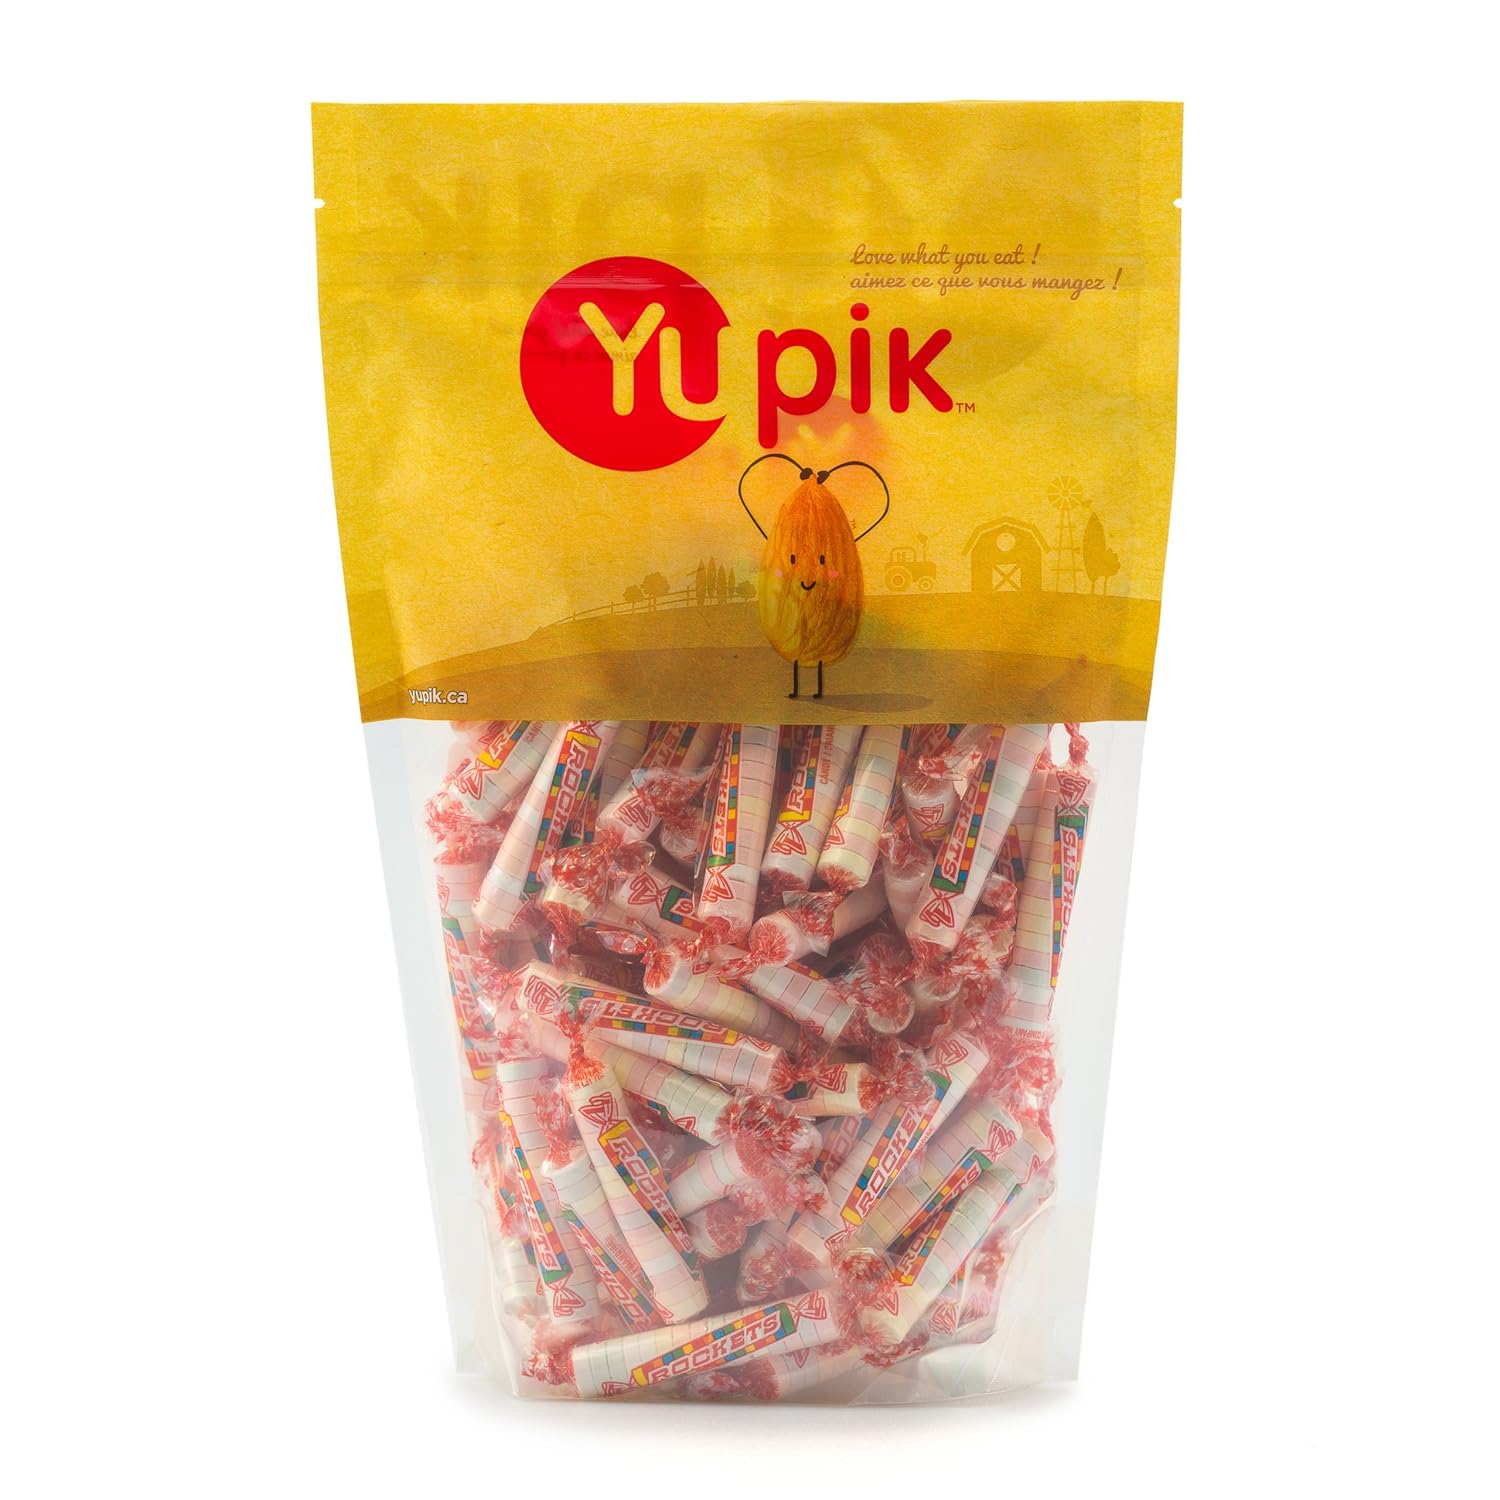 Yupik Classic Rockets, Wrapped, Pressed Candy, 2.2 lb